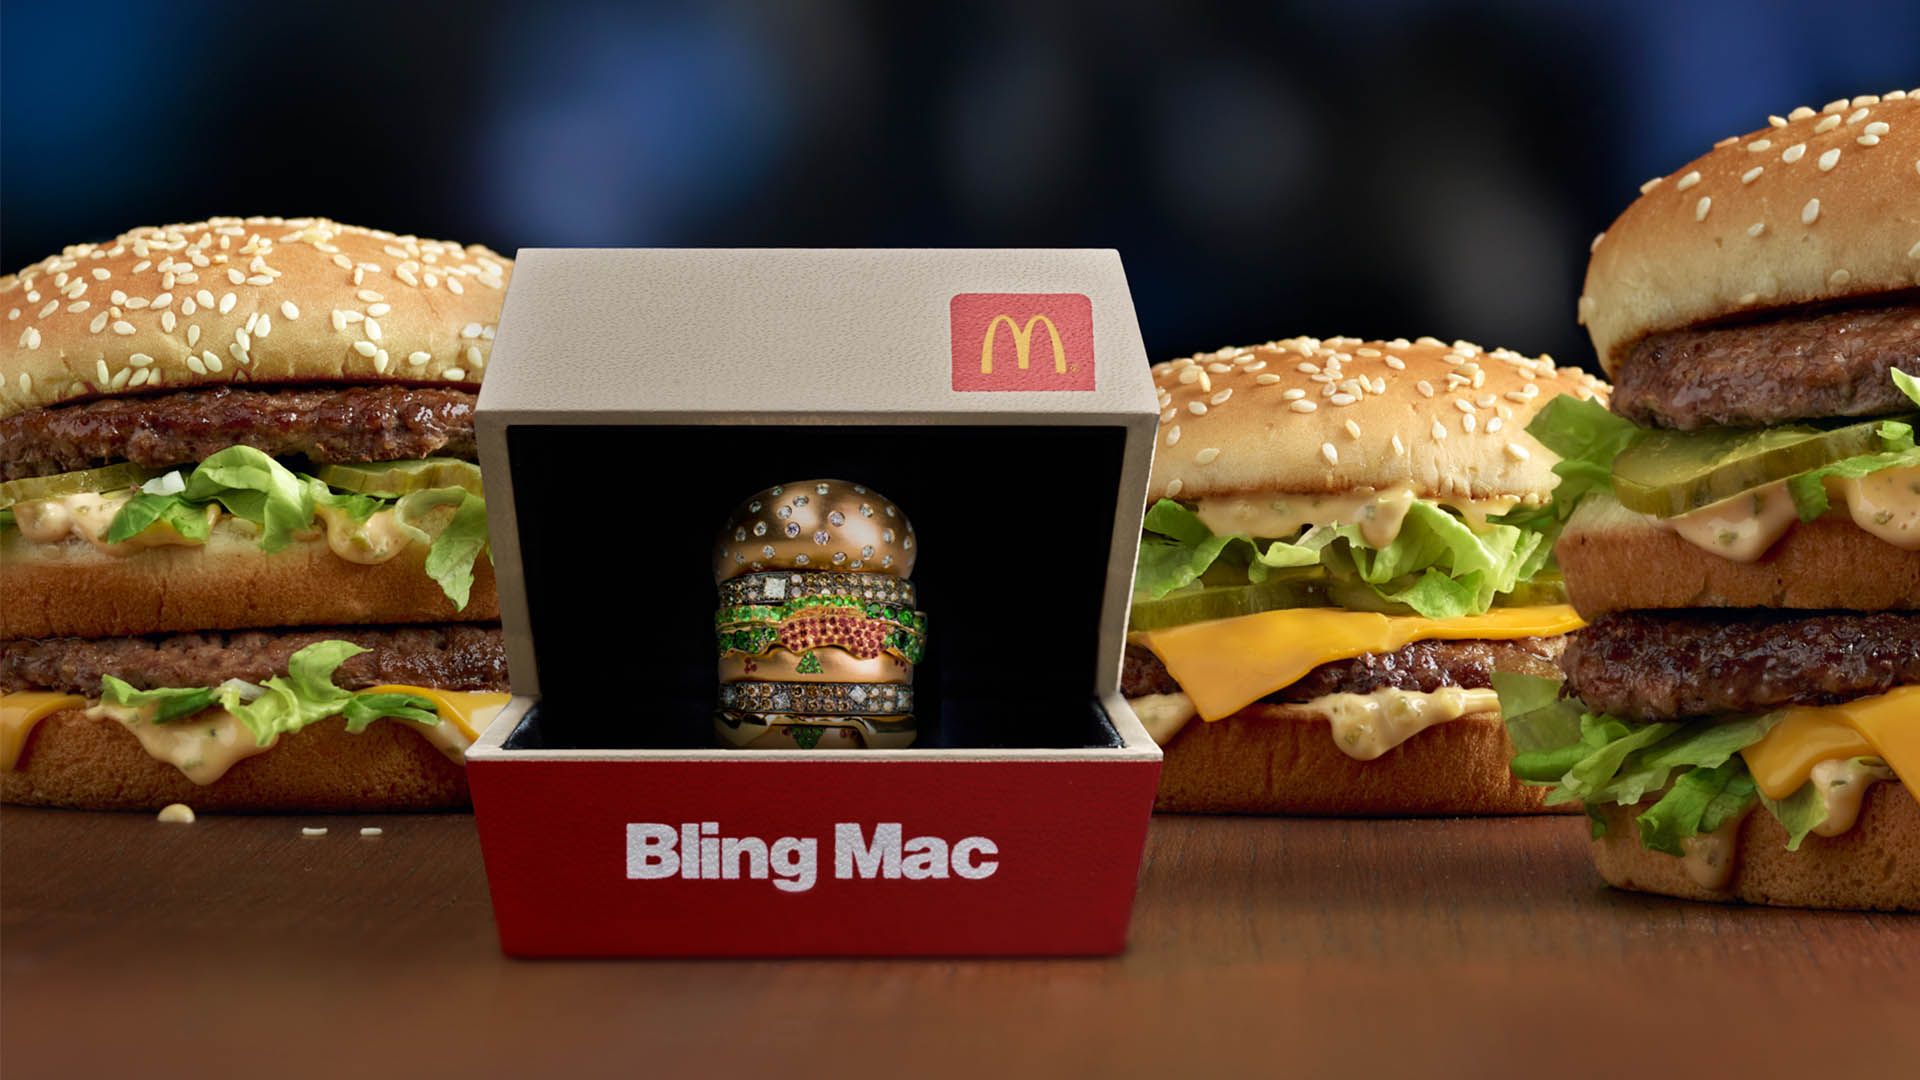 McDonald's offering diamond ring 'Bling Mac' ring